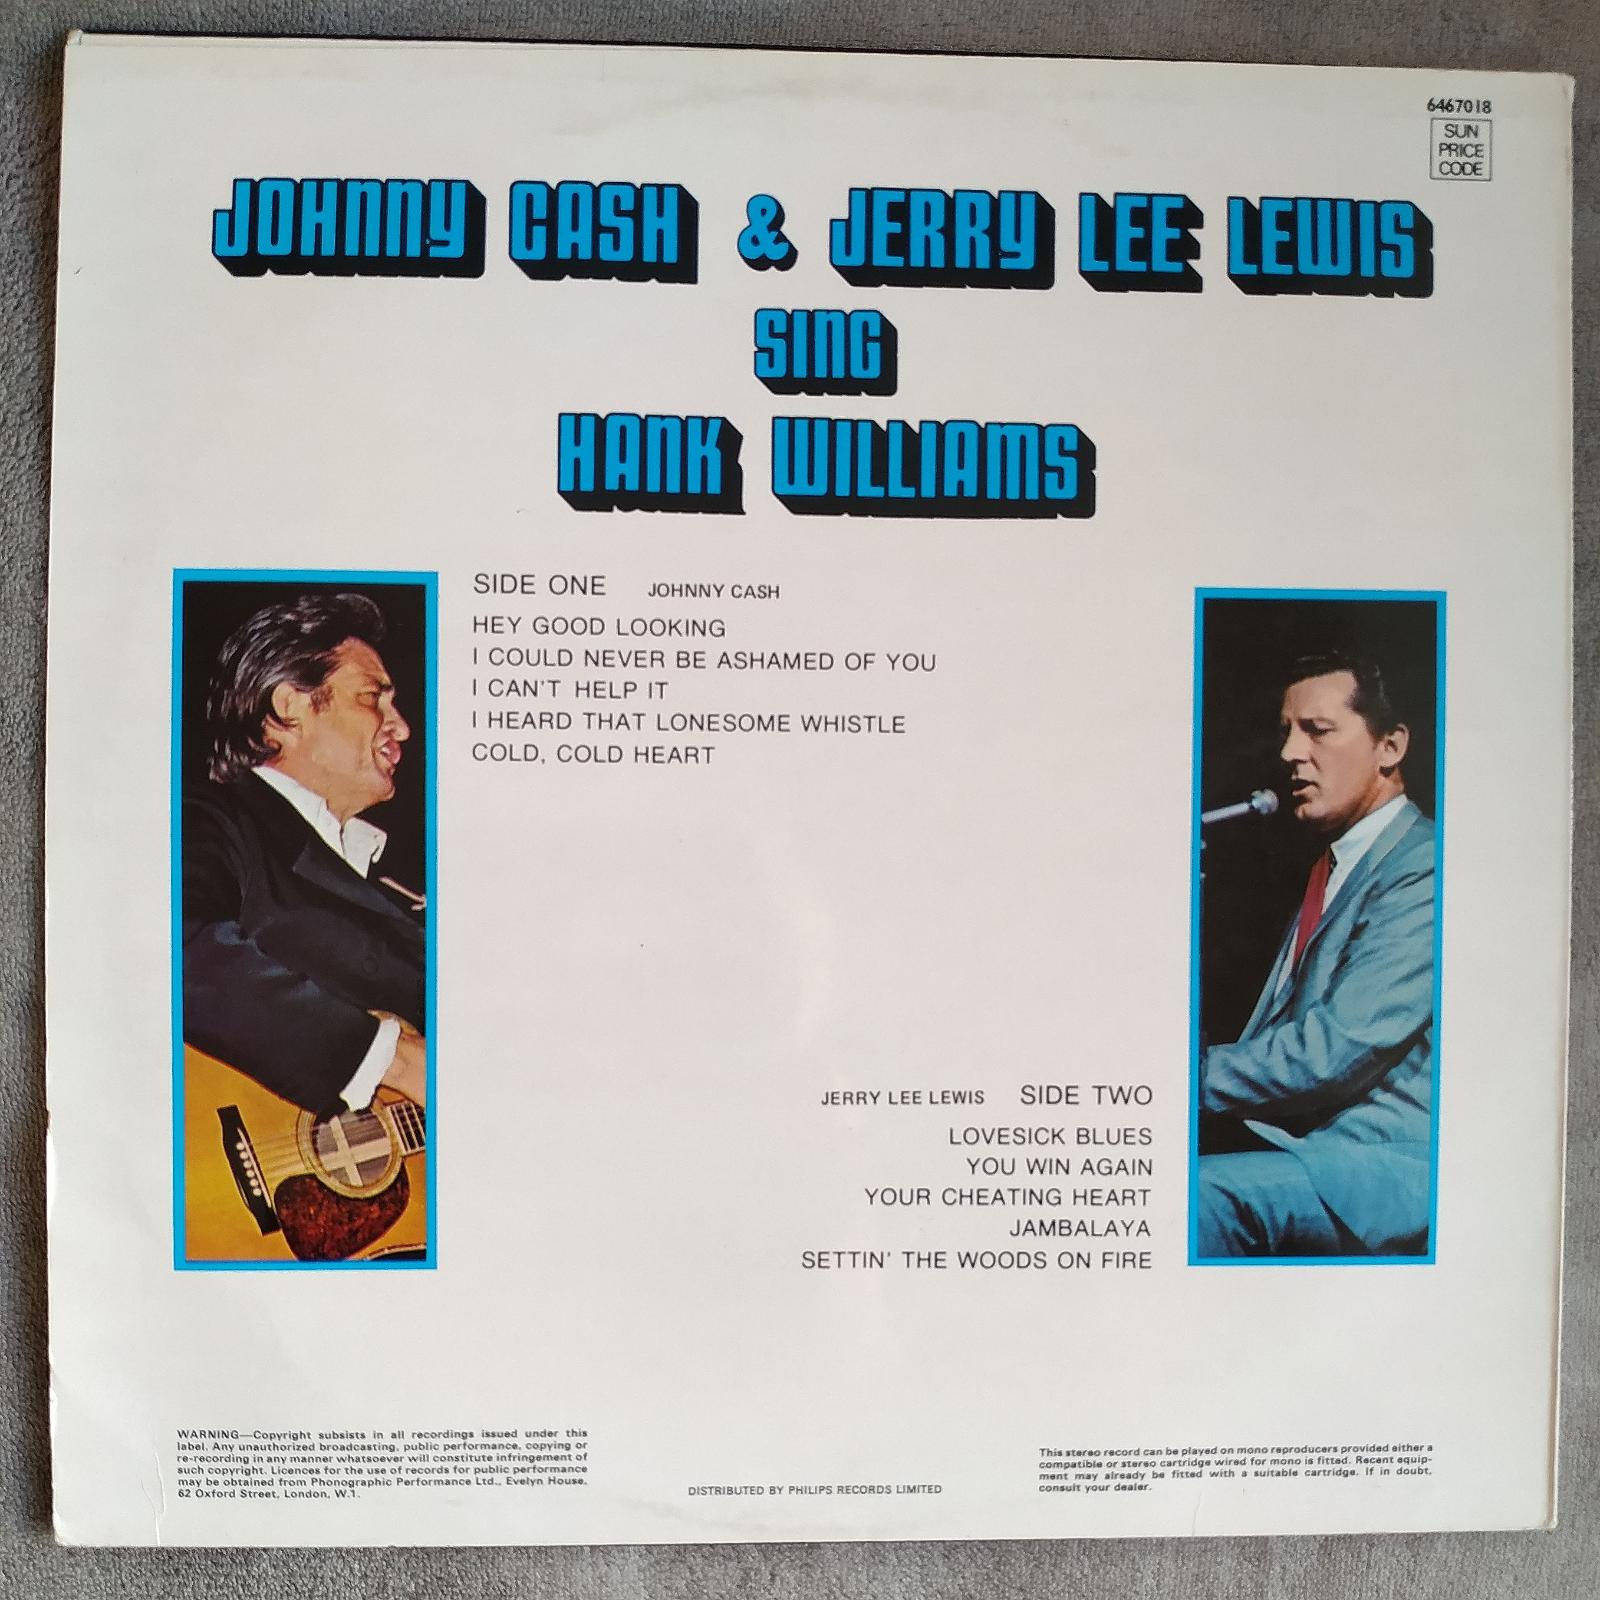 LP JOHNY CASH & J.L.LEWIS sing H.WILLIAMS(1971) UK SUN EX++TOP STAV! - Hudba